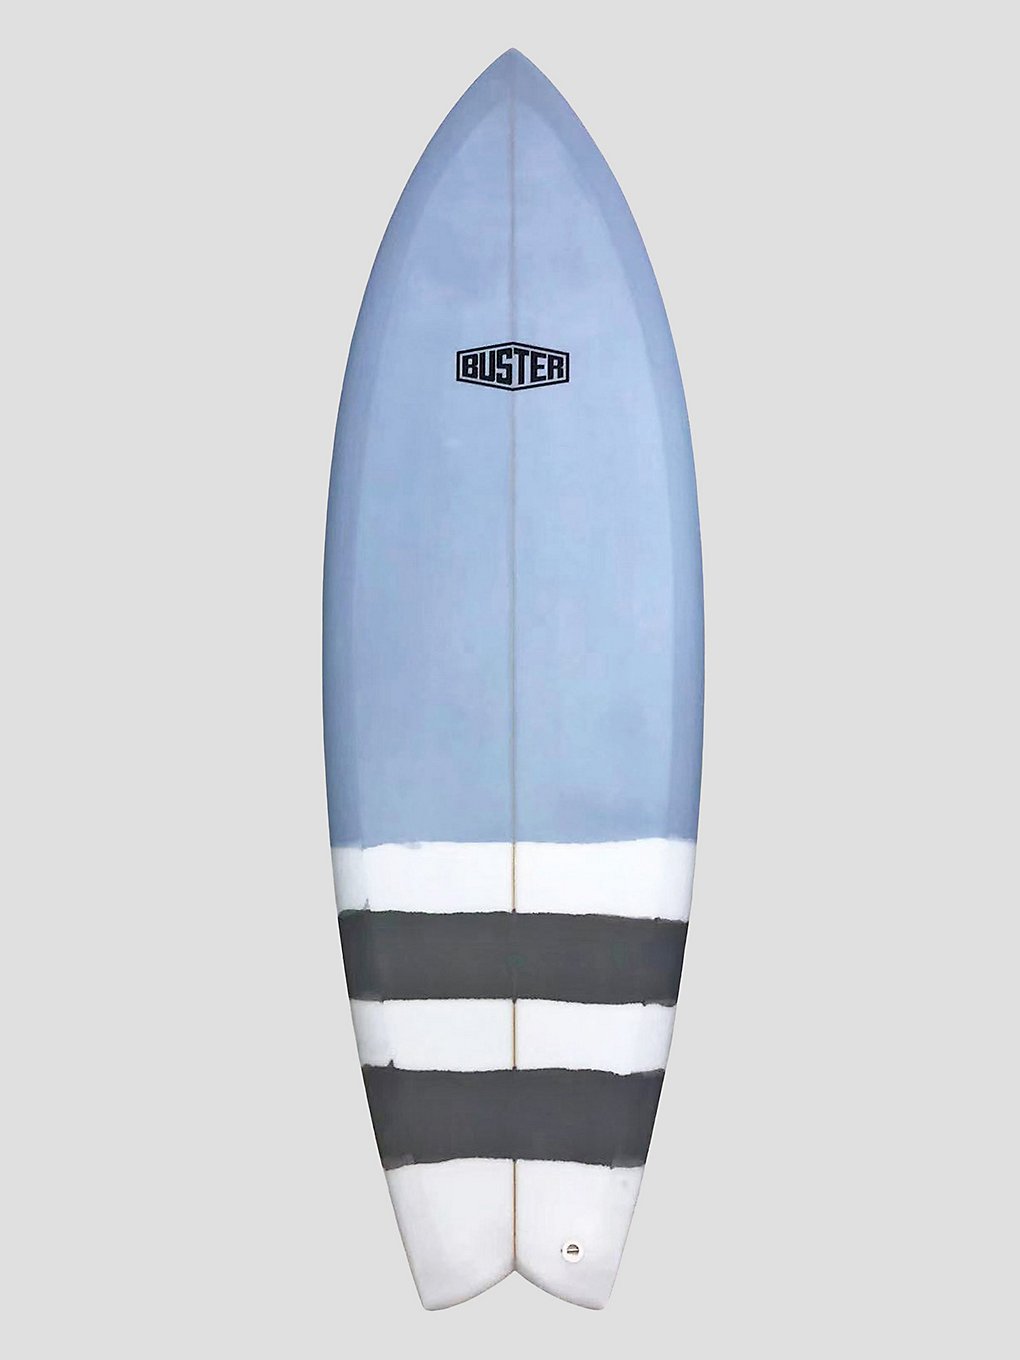 Buster 5'10 Quad Fish Surfboard grau